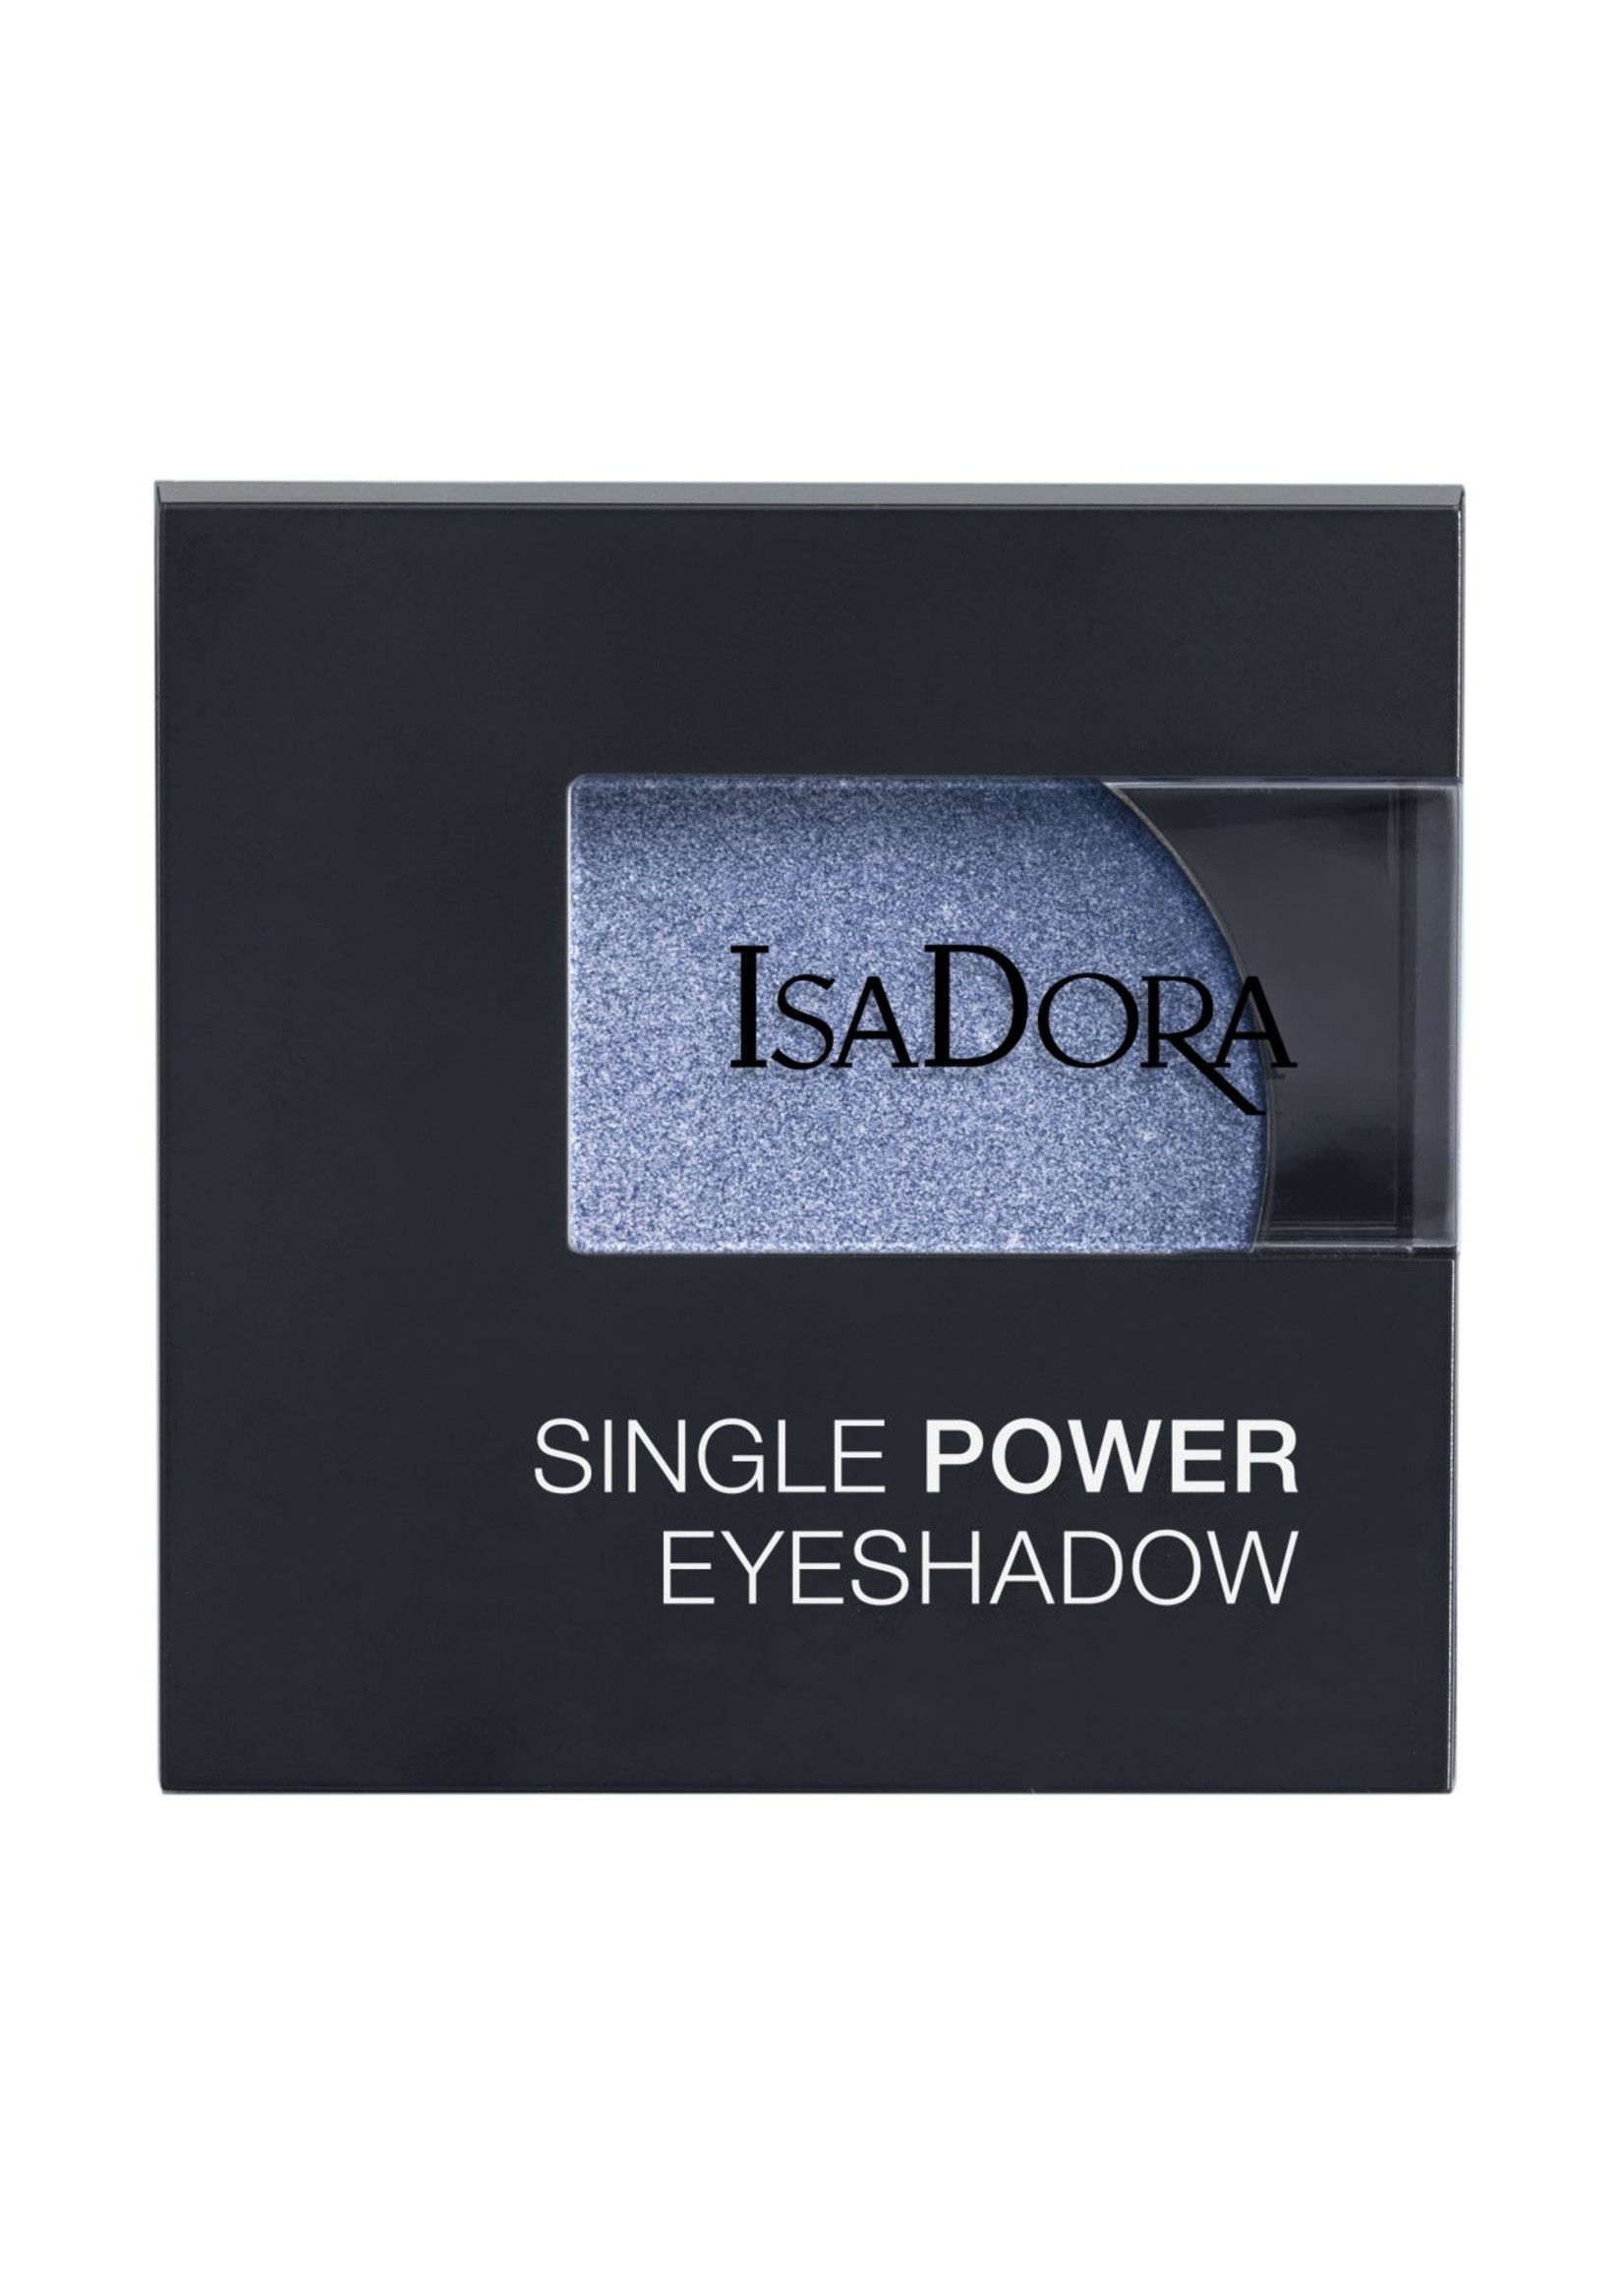 Isadora SINGLE POWER EYESHADOW – Starry Blue 20 by Isadora